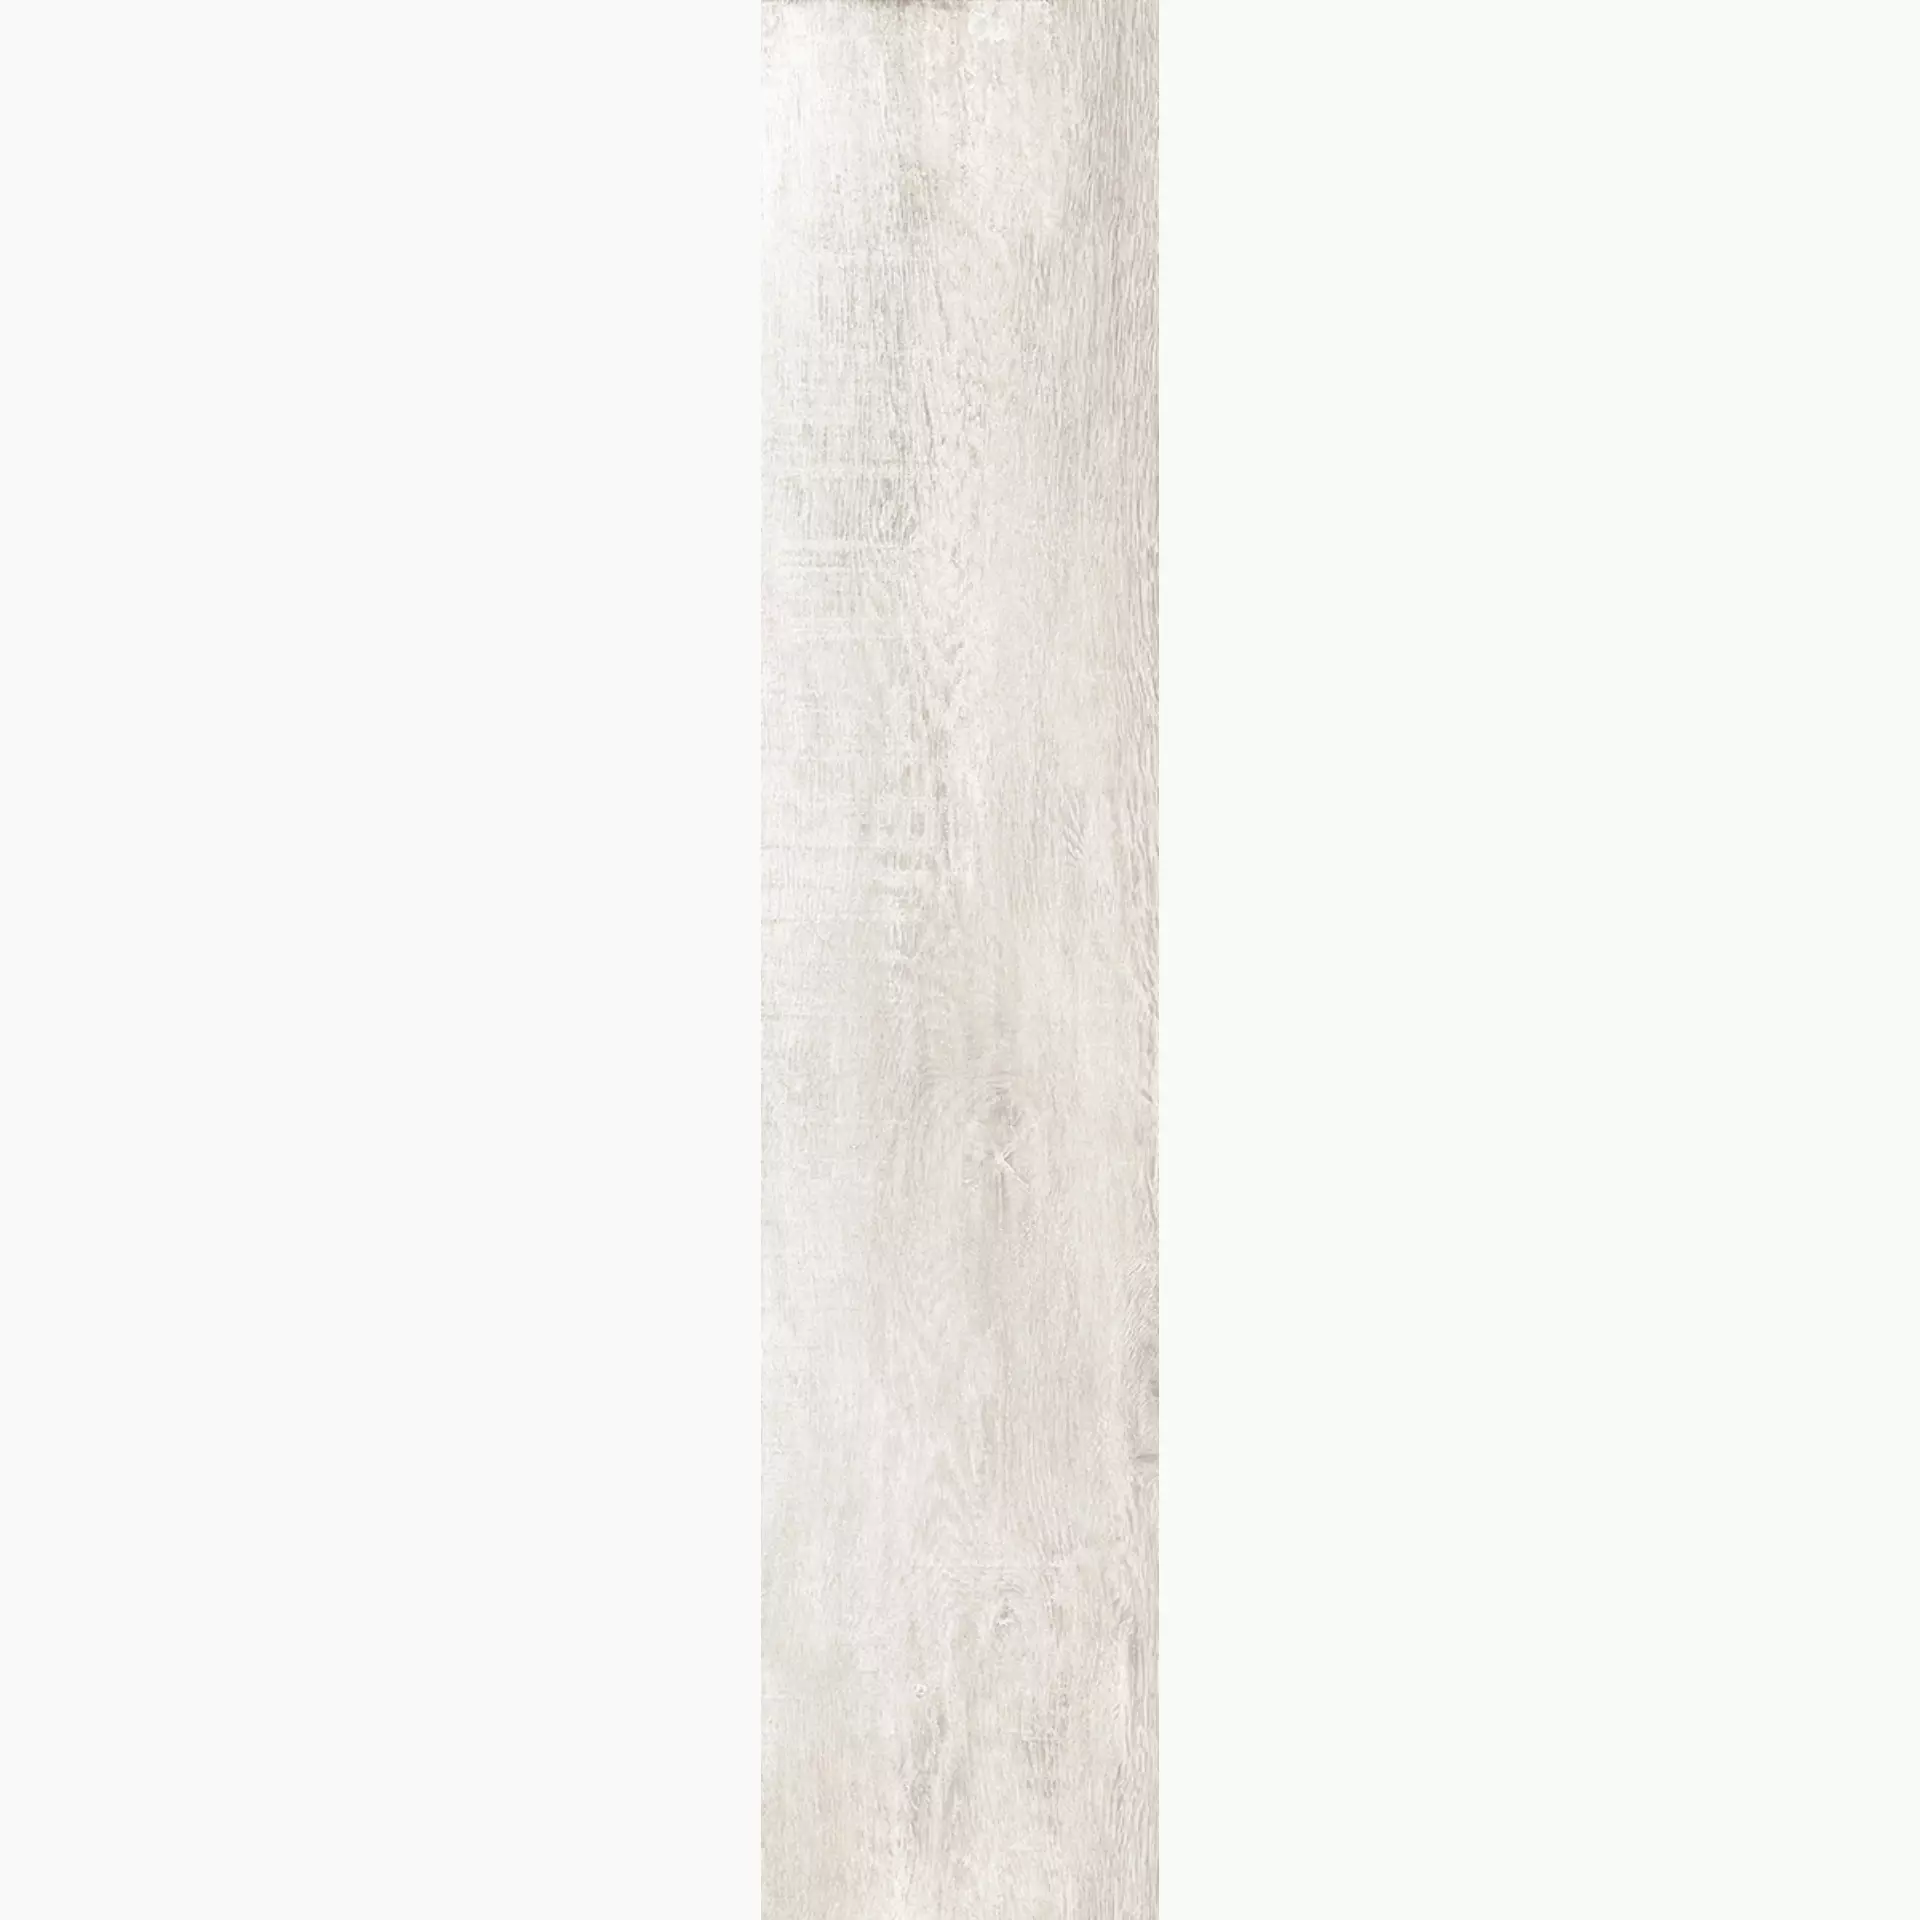 Rondine Greenwood Bianco Naturale J86459 24x120cm 8,5mm